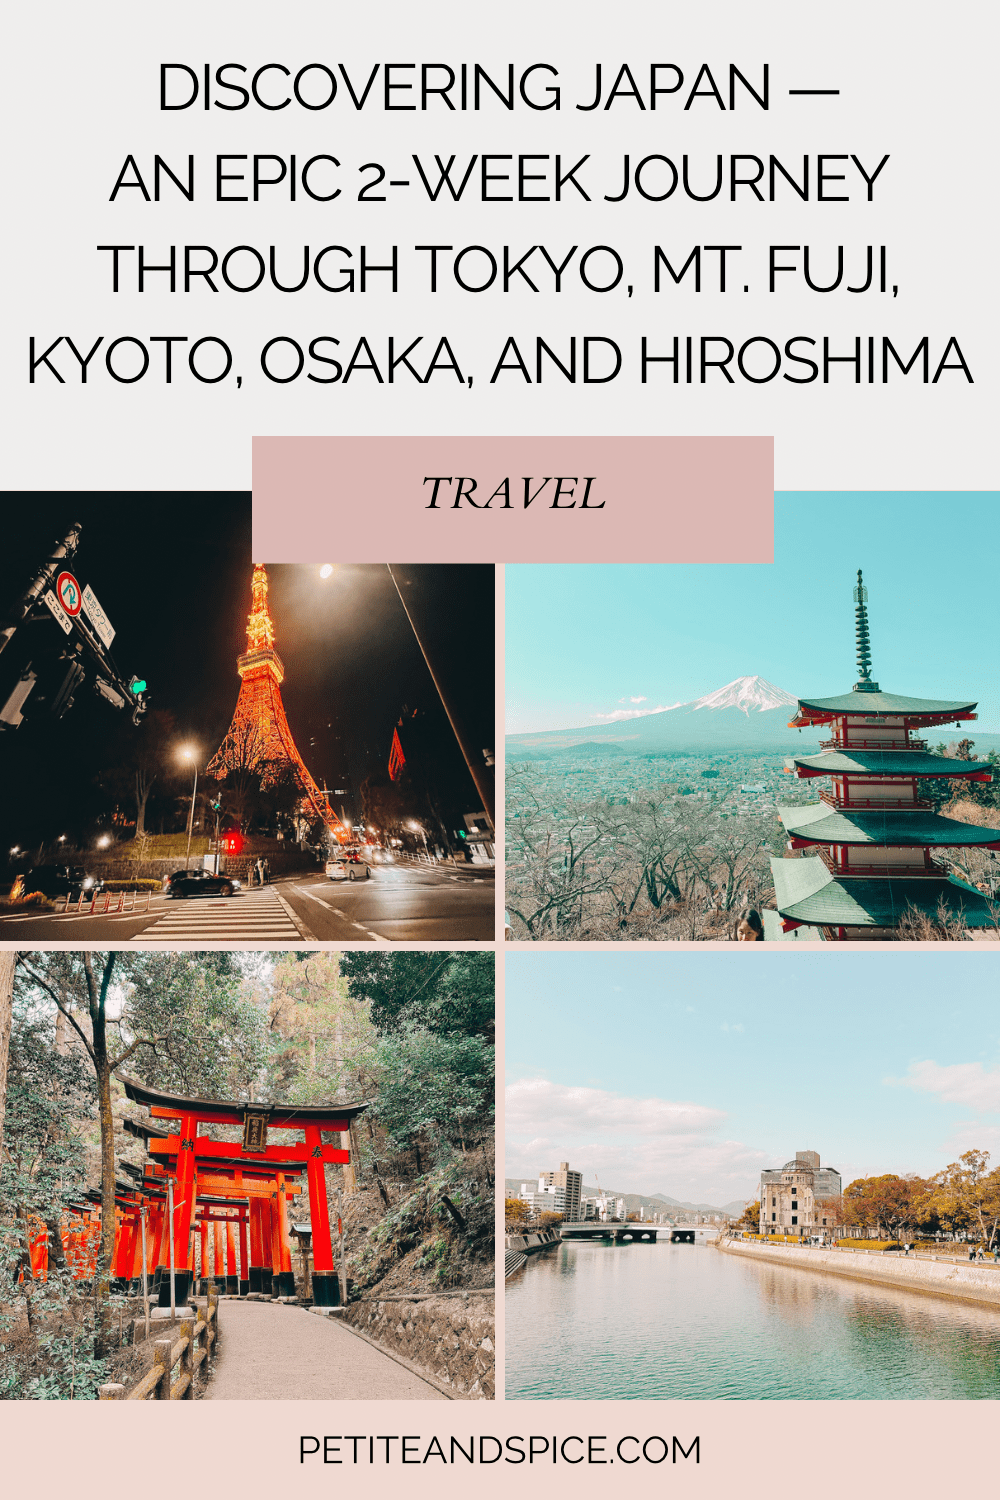 Discovering Japan —An Epic 2-Week Journey Through Tokyo, Mt. Fuji, Kyoto, Osaka, and Hiroshima